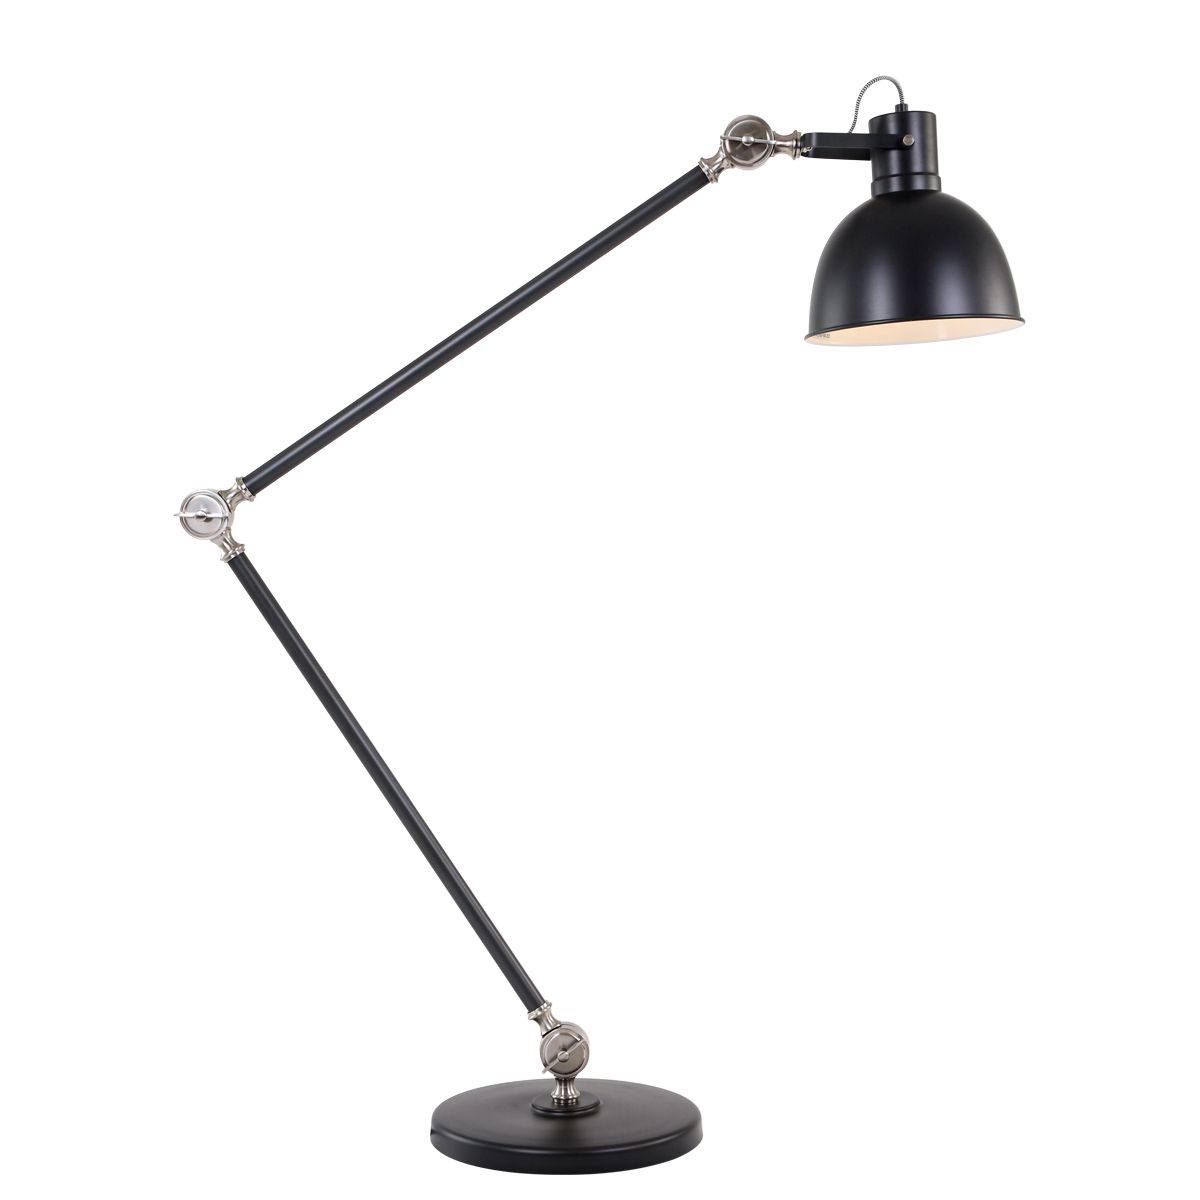 Industrie Lampe Stehleuchte Loft Fabrik Stehlampe Retro Lampe Fotolampe Antik 